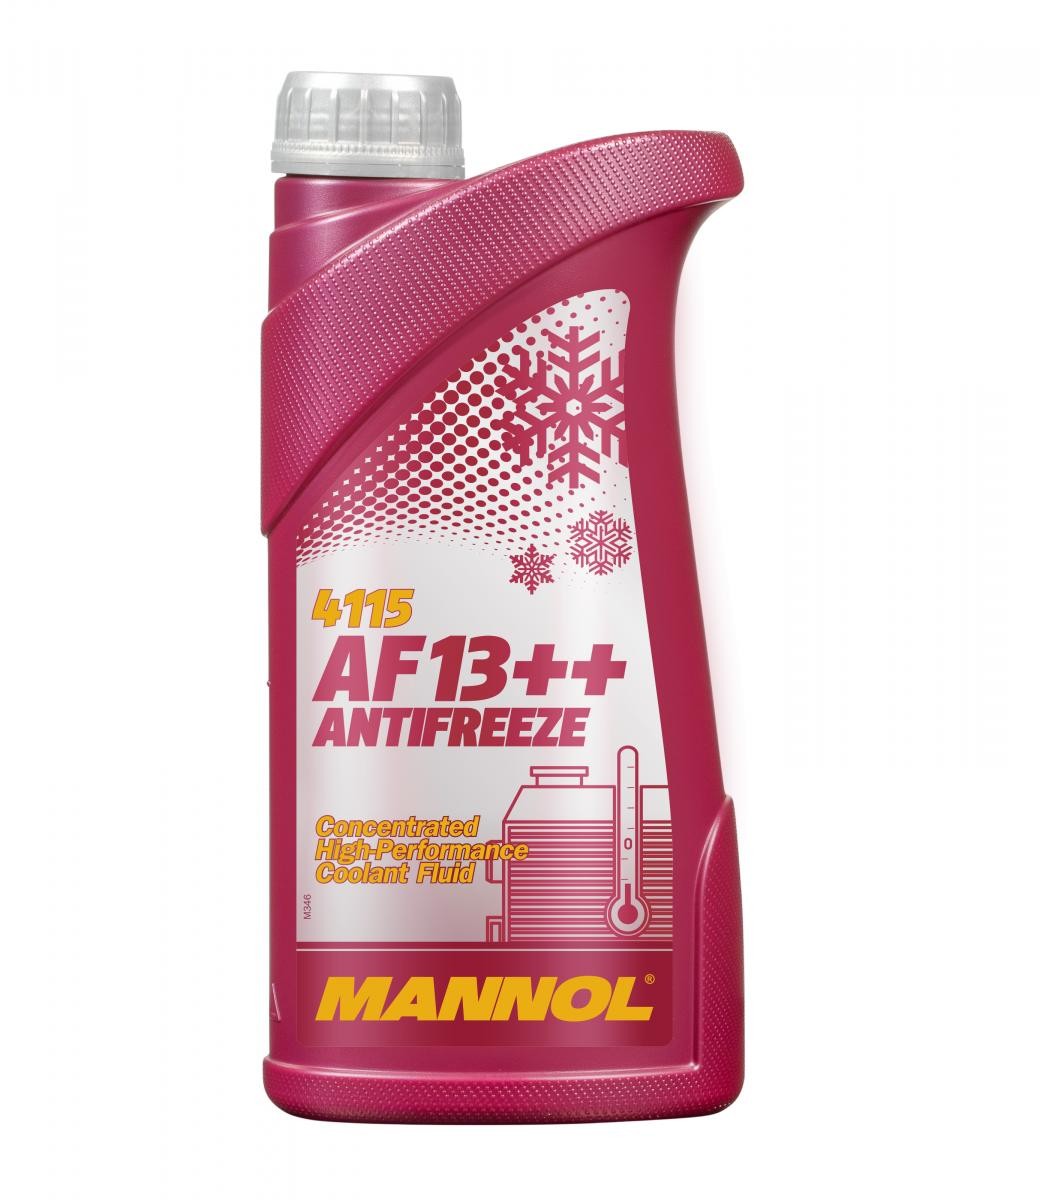 TRAXX FLY Kühlmittel G12 Rot, 1l, -38(50/50) MANNOL AF13++, High-performance MN4115-1